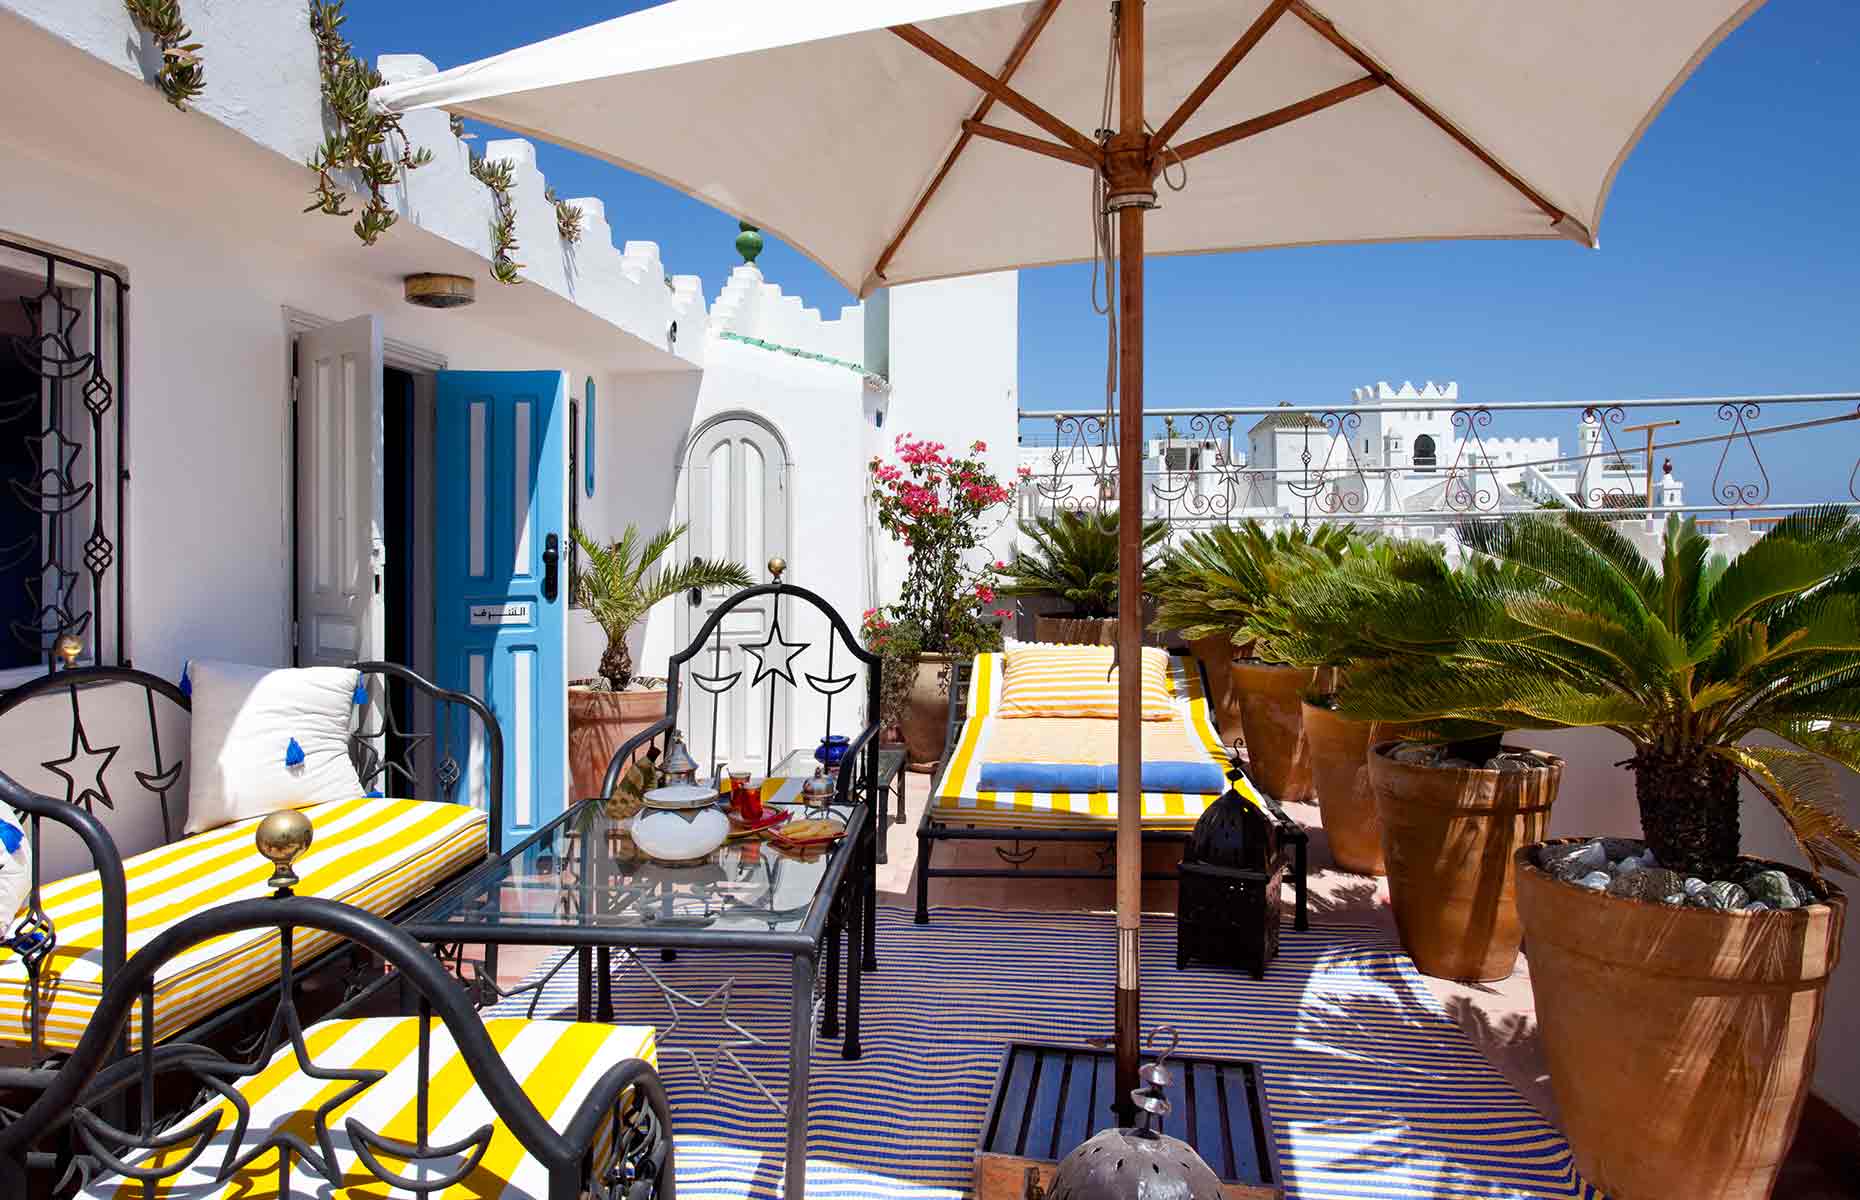 Hôtel Dar Sultan - Séjour Maroc, Voyage Tanger